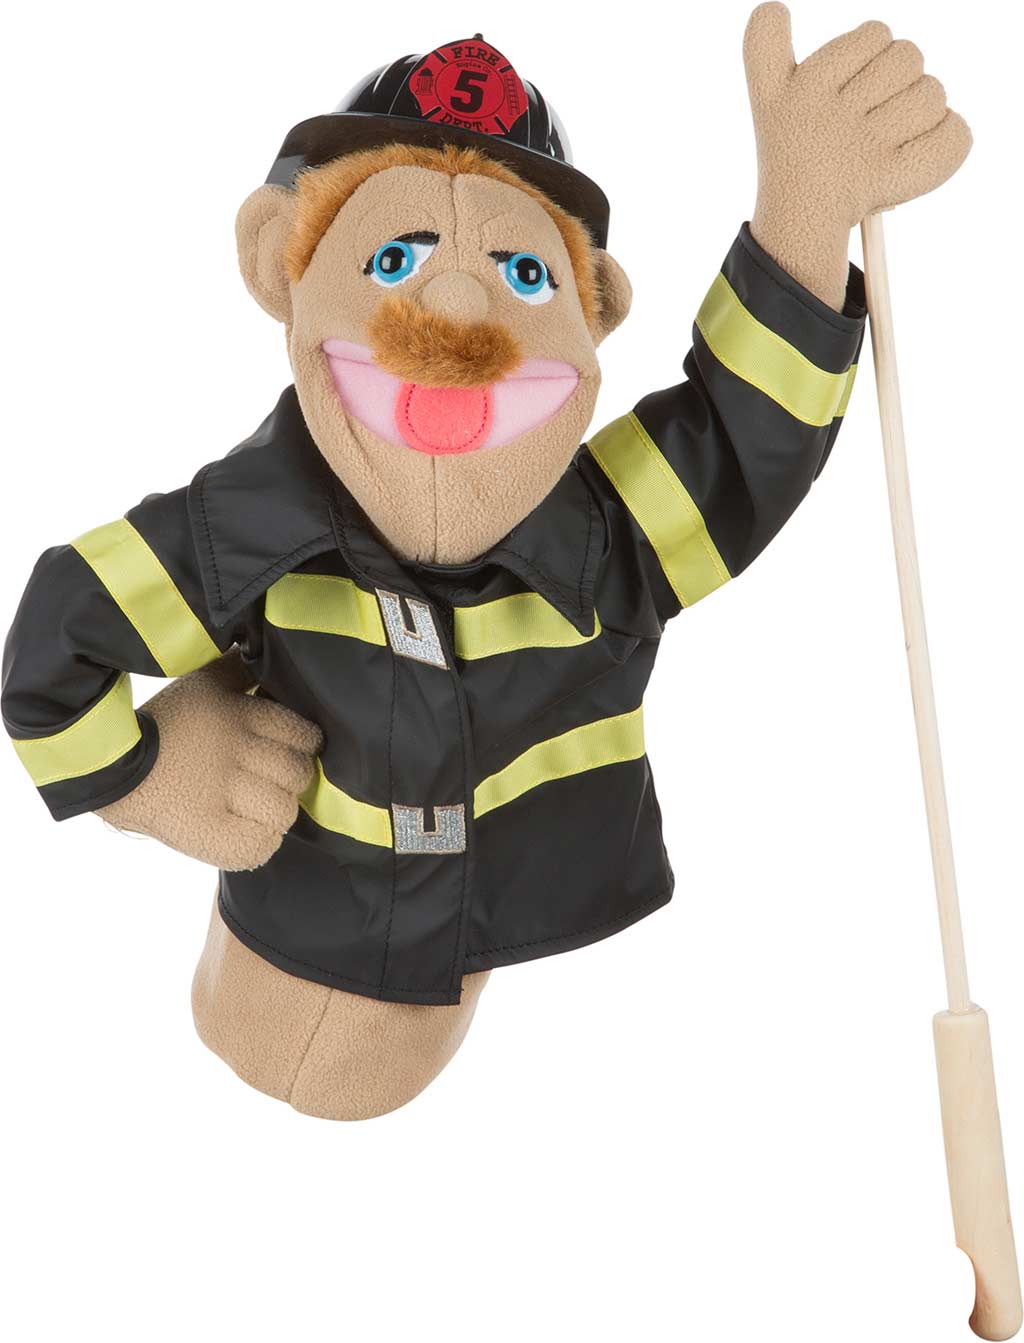 Melissa & Doug Firefighter Puppet Toy Play MYTODDLER New 